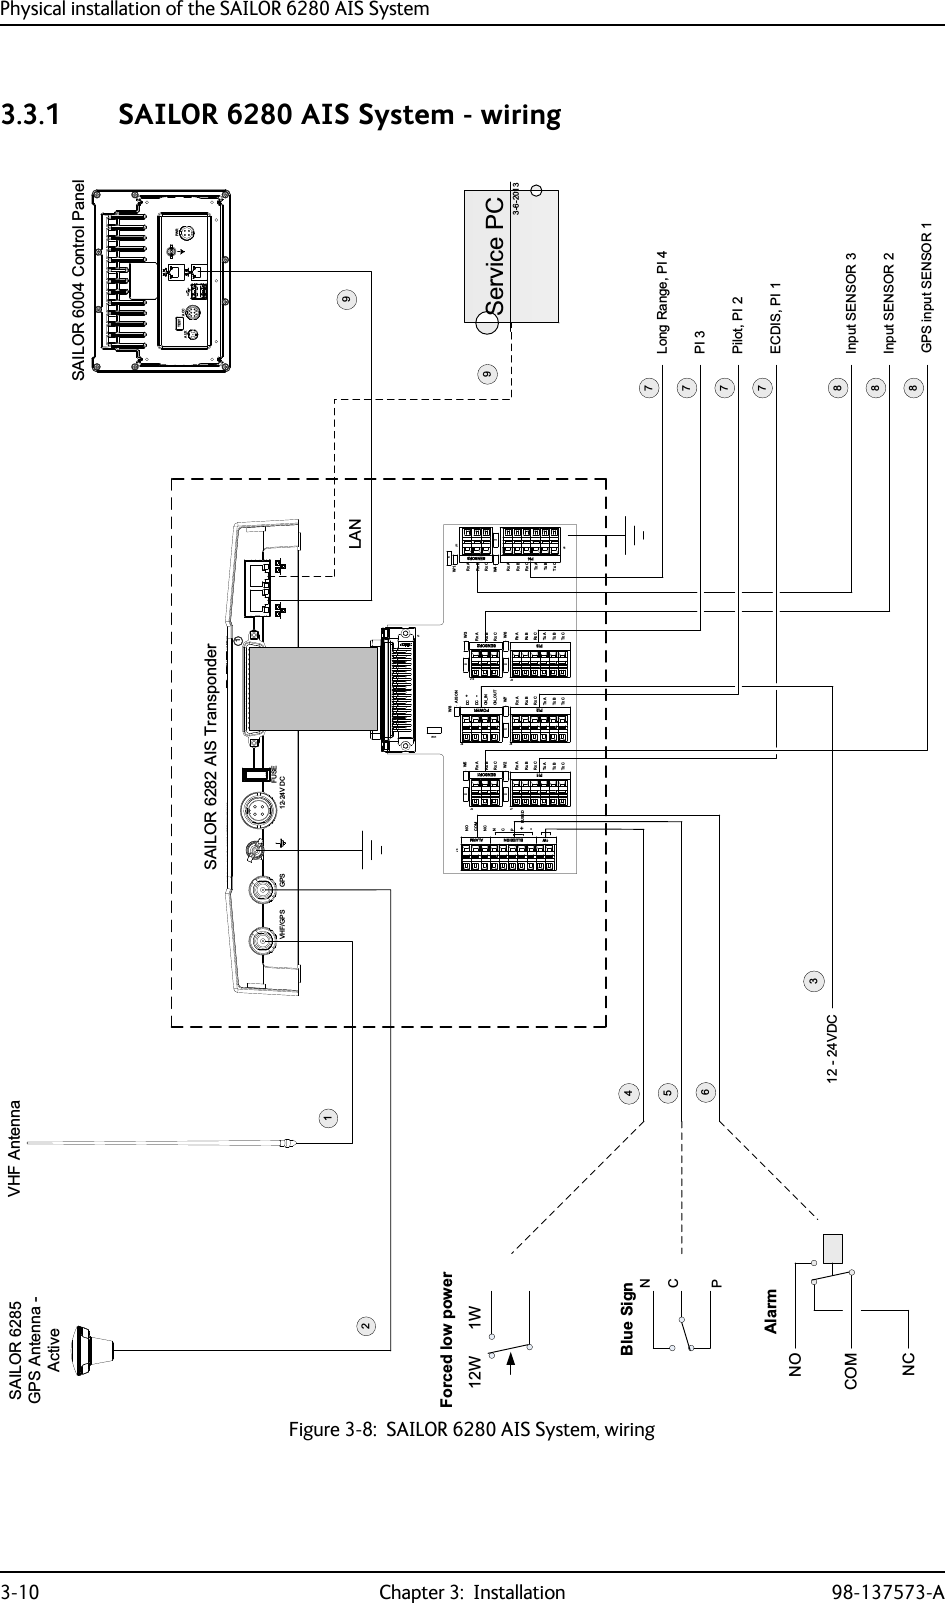 Physical installation of the SAILOR 6280 AIS System3-10 Chapter 3:  Installation 98-137573-A3.3.1 SAILOR 6280 AIS System - wiringFigure 3-8:  SAILOR 6280 AIS System, wiring12 - 24VDC534673:57(67$8; $&amp;&amp;SAILOR 6004 Control Panel7778889Long Range, PI 4Pilot, PI 2GPS input SENSOR 1ECDIS, PI 1Input SENSOR 3Input SENSOR 2PI 39-5[&amp;5[%5[$7[$7[%7[&amp;5[$5[%5[&amp;7[$7[%7[&amp;5[$5[%5[&amp;3, 6(16255[$5[%5[&amp;5[$5[%5[&amp;7[$7[%7[&amp;3, 6(162521B28721B,1&apos;&amp;&apos;&amp;32:(5$,6213,7[$7[%7[&amp;5[$5[%5[&amp;5[&amp;5[%5[$3, 6(1625)86(&apos;&amp;311&amp;&amp;2012: %/8(6,*1 $/$50---------555555559::::::::SAILOR 6285GPS Antenna -ActiveLAN21SAILOR 6282 AIS TransponderSUB-D50FUSE12-24V DCGPSVHF/GPSVHF Antenna3-6-2013Service PC12W 1WForced low powerNOCOMNCAlarmBlue SignNCP